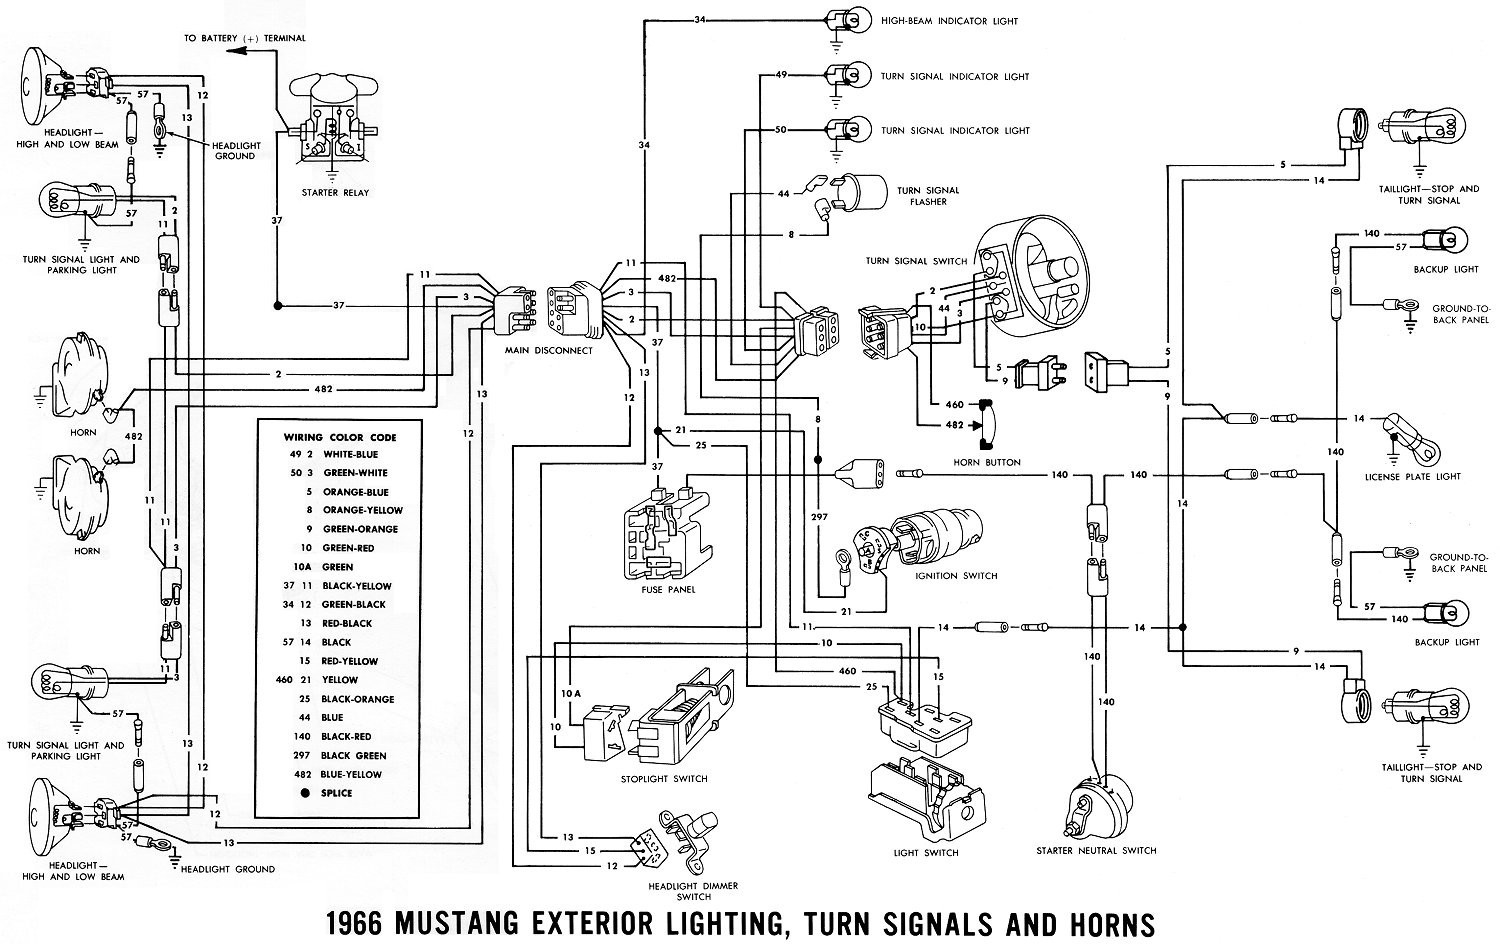 1966 Mustang Wiring Diagram 1966 Mustang Wiring Diagrams Average Joe Restoration Tearing Alternator Diagram